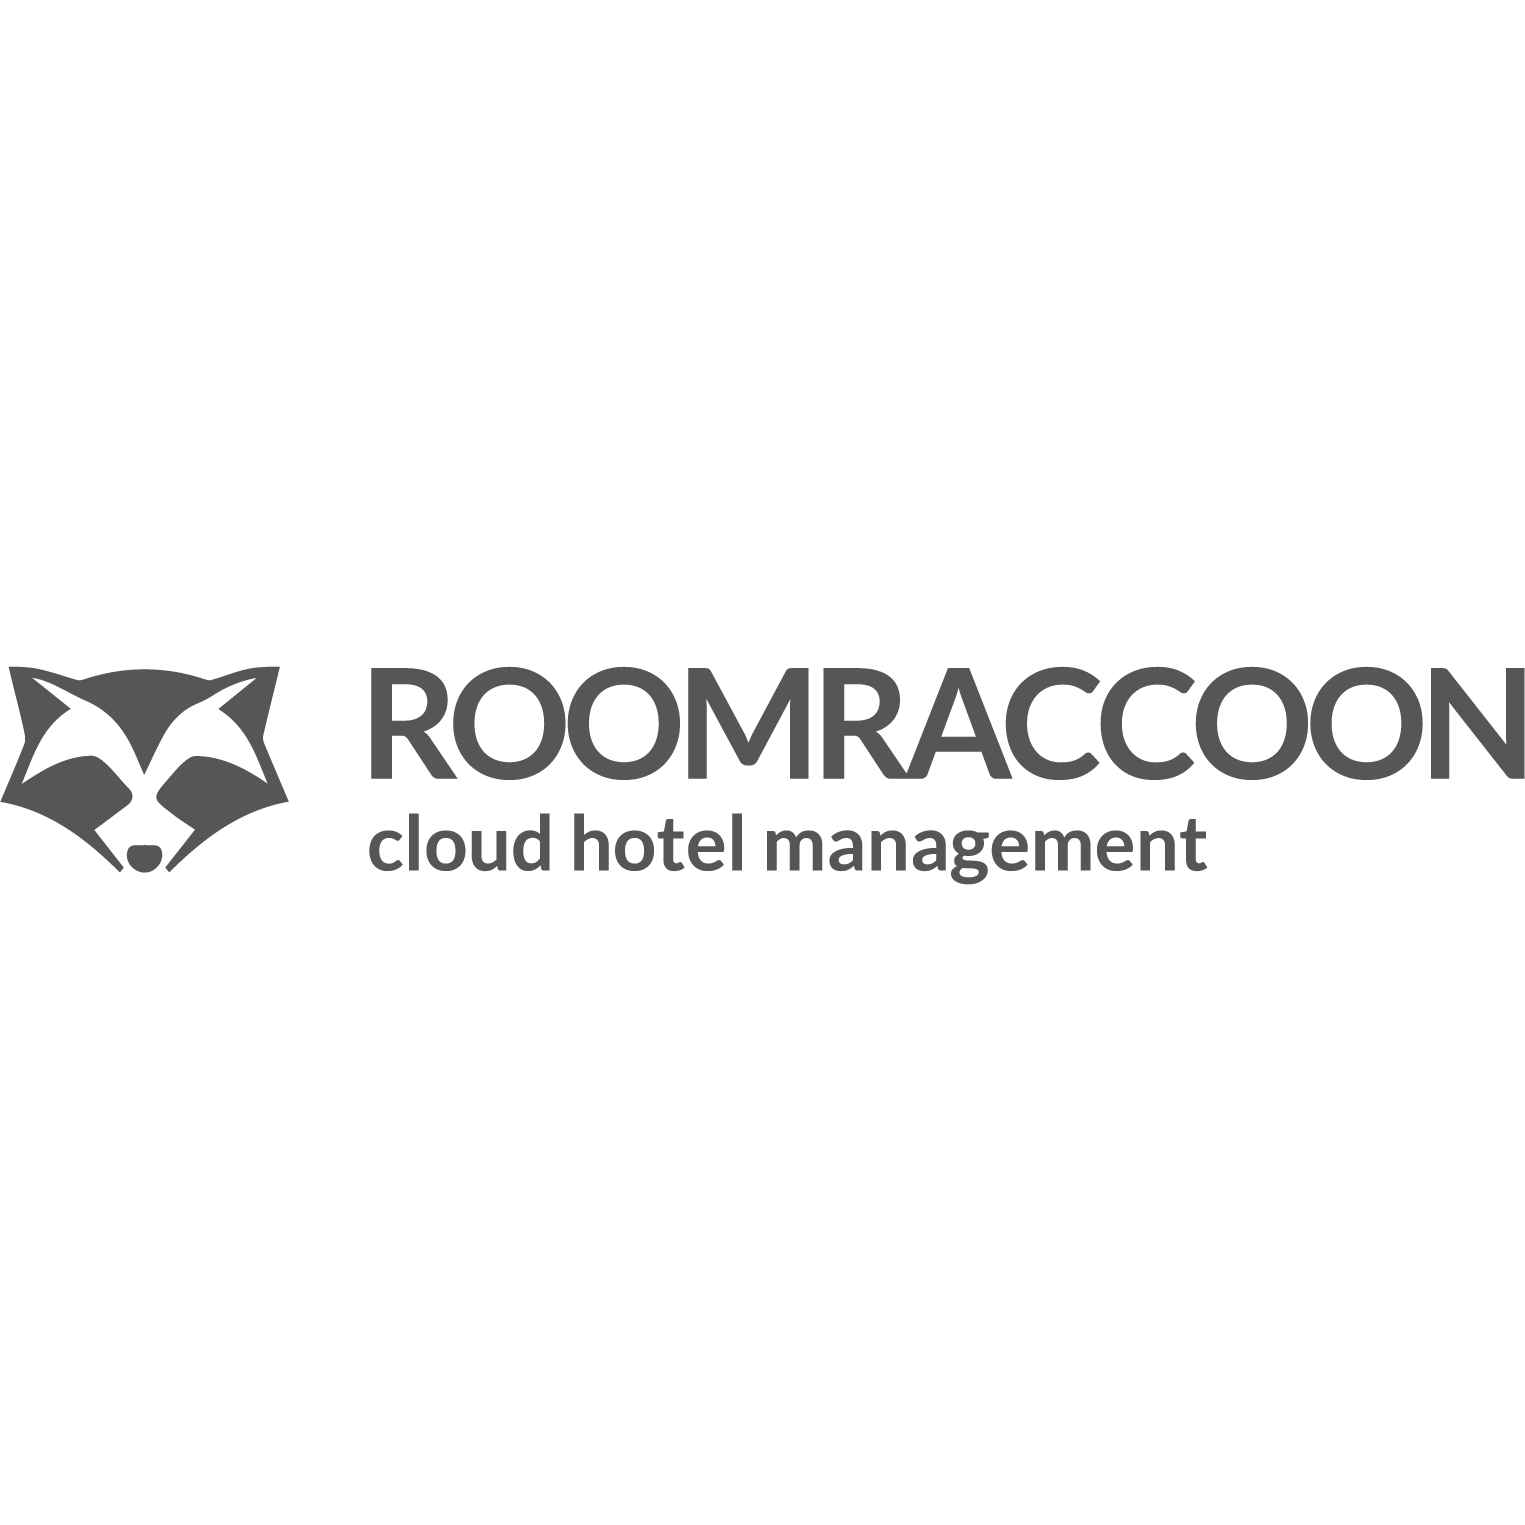 Roomraccoon-pms-partner-logo